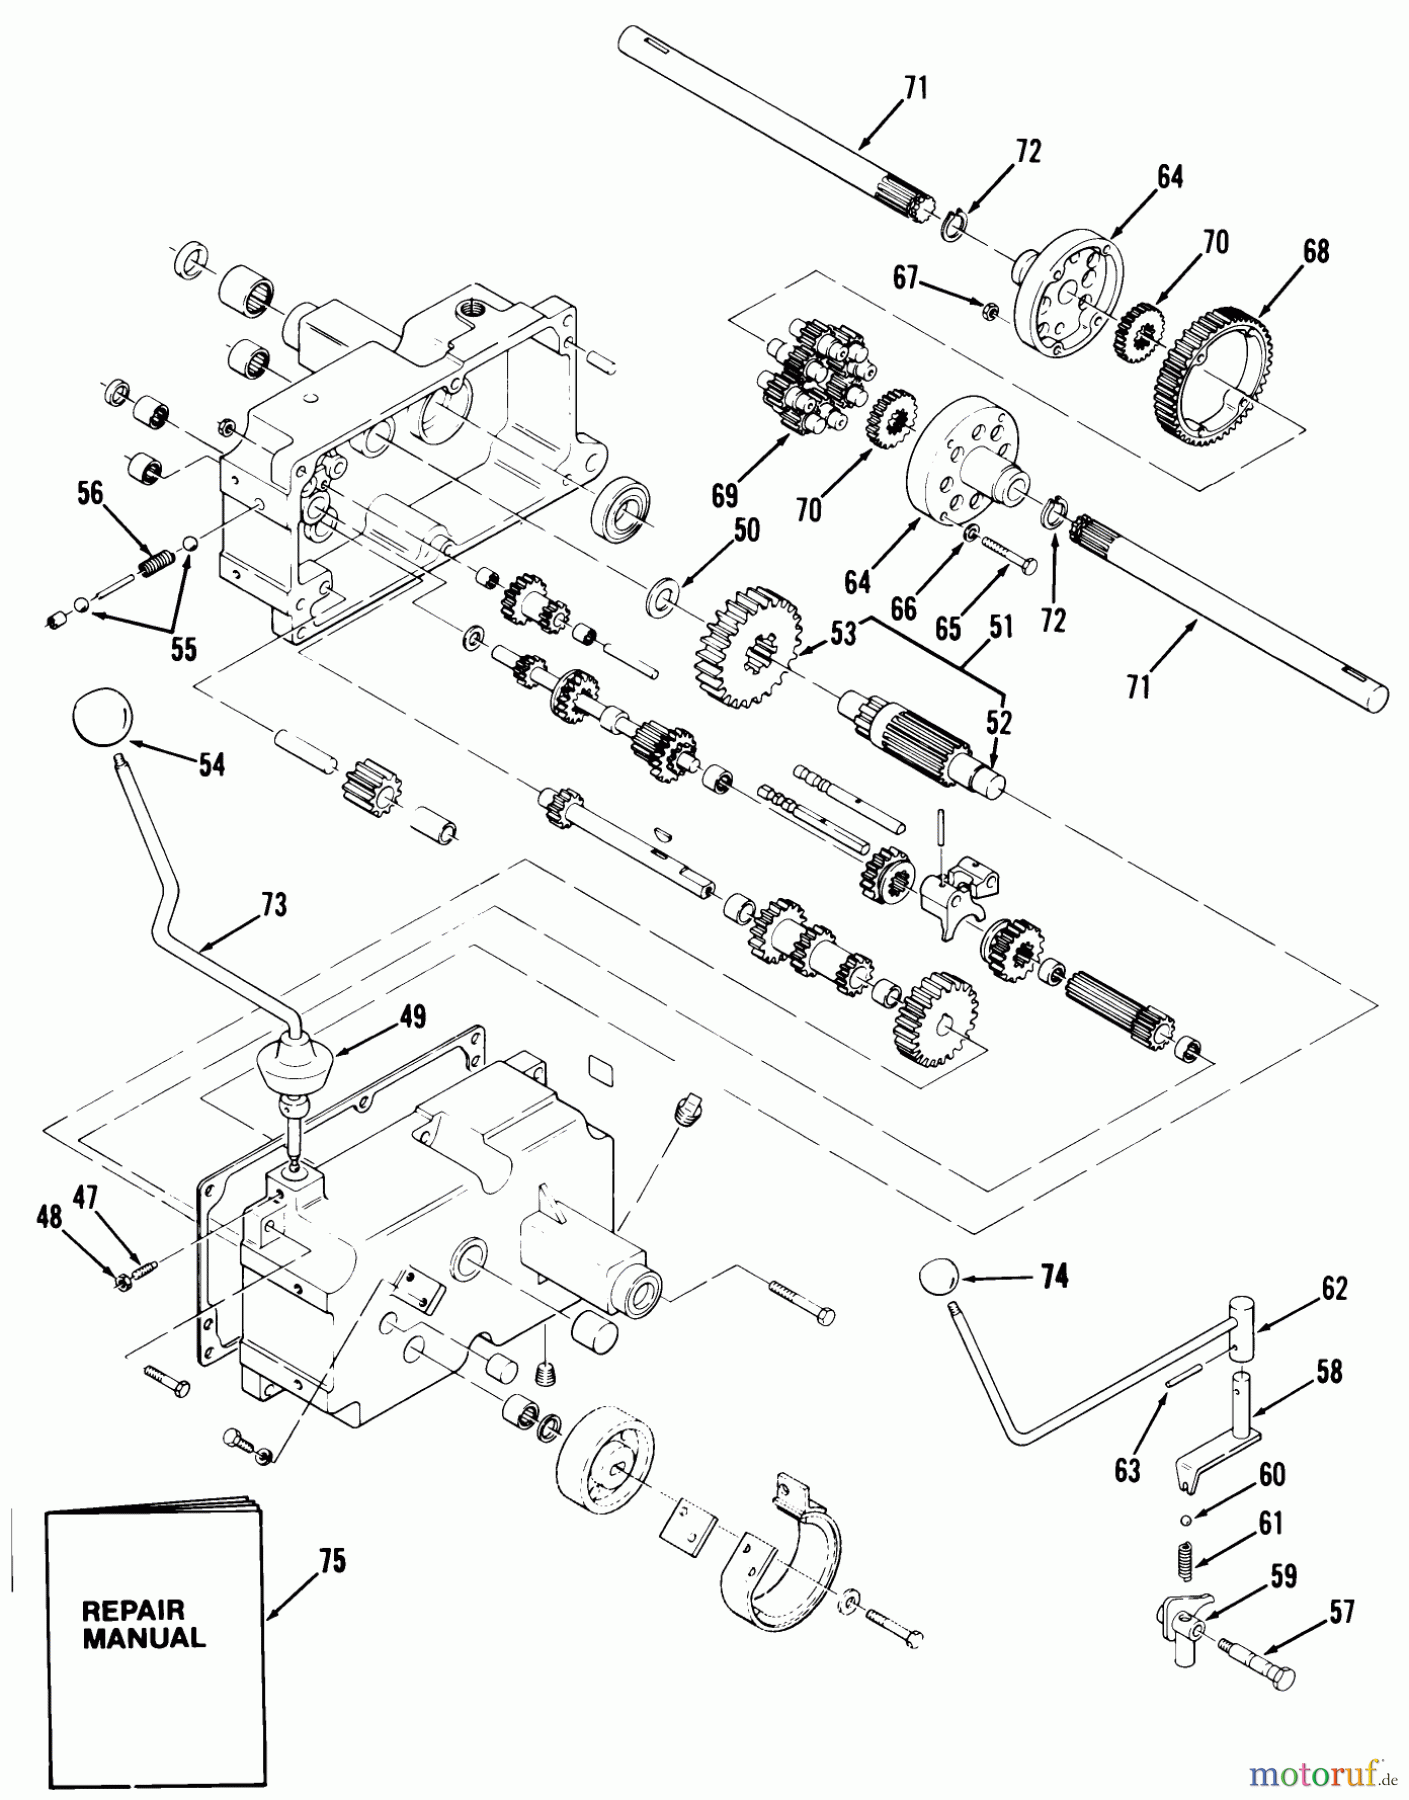  Toro Neu Mowers, Lawn & Garden Tractor Seite 1 11-14KE01 (C-145) - Toro C-145 Automatic Tractor, 1984 MECHANICAL TRANSMISSION-8-SPEED #2